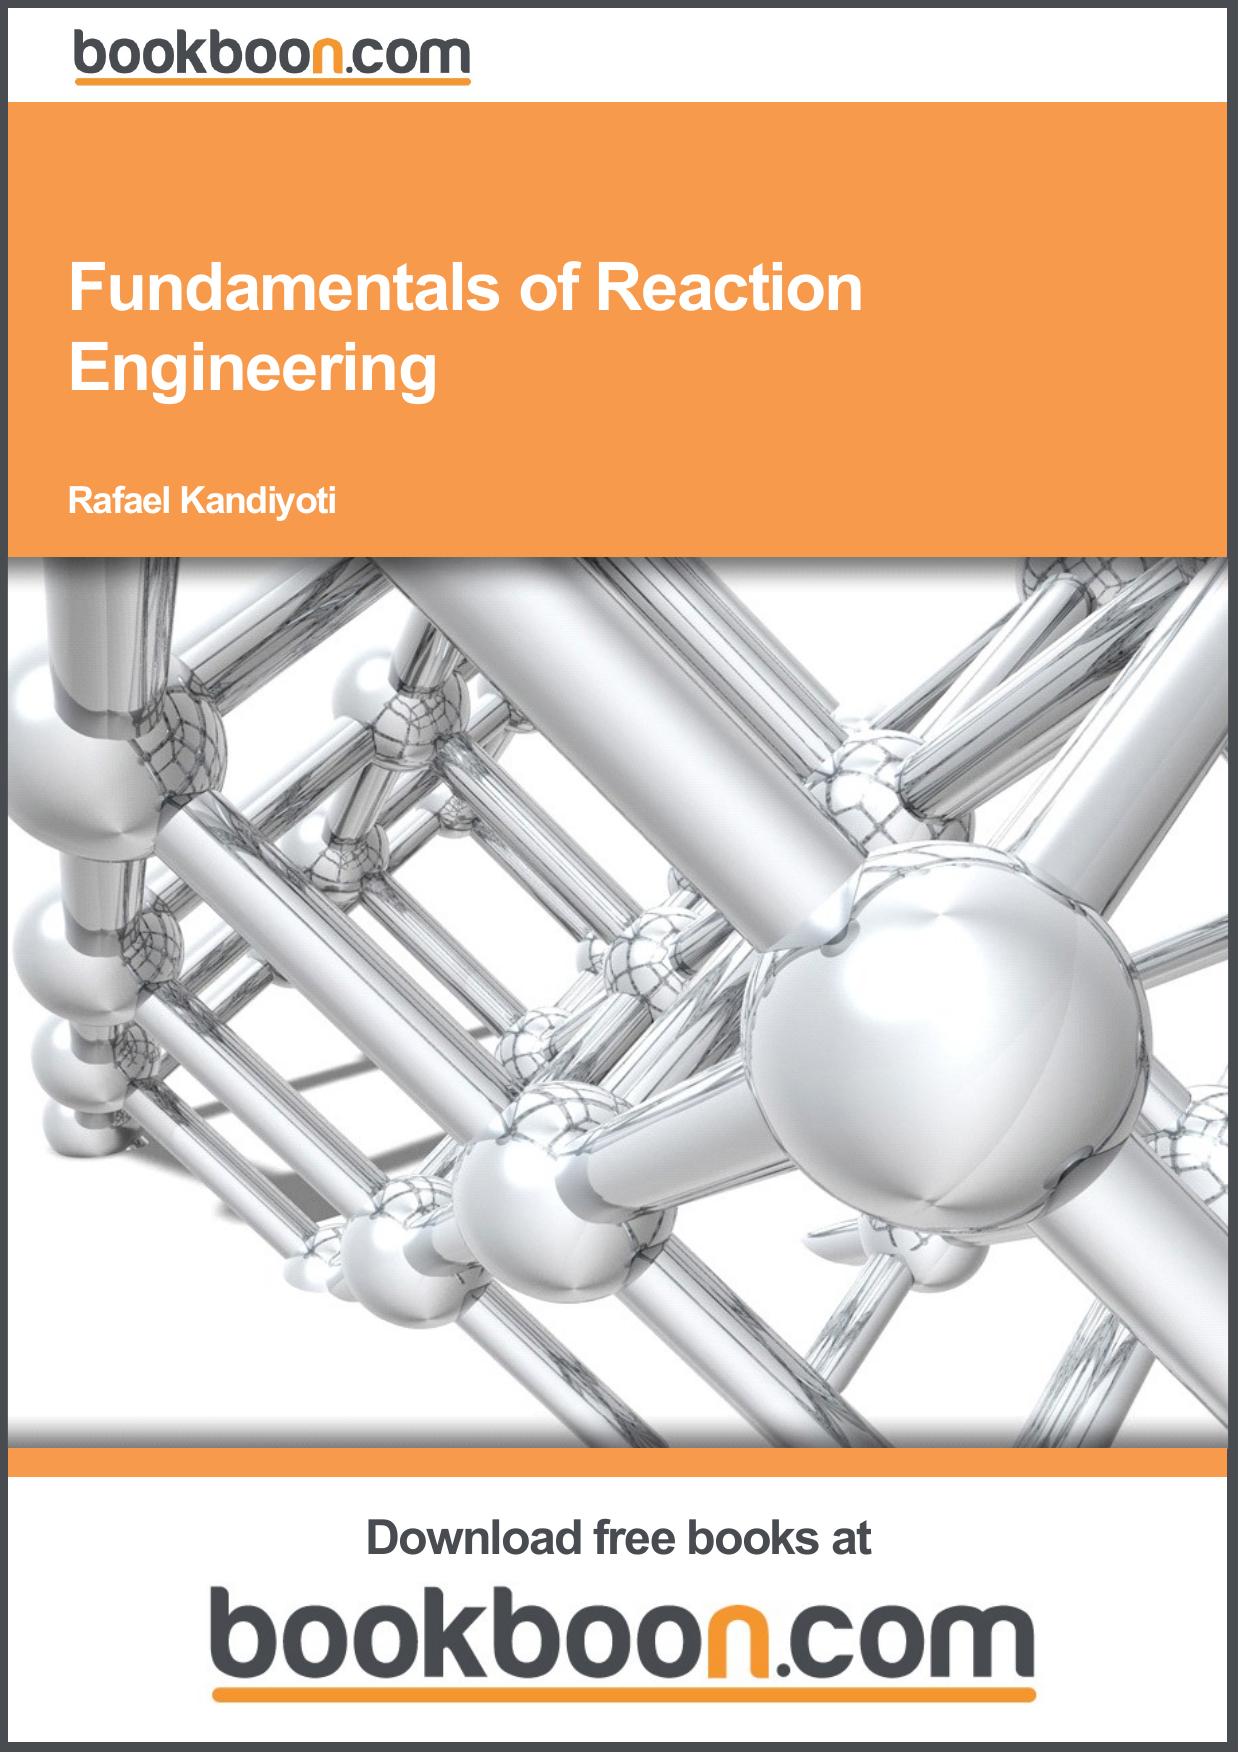 Fundamentals of Reaction Engineering